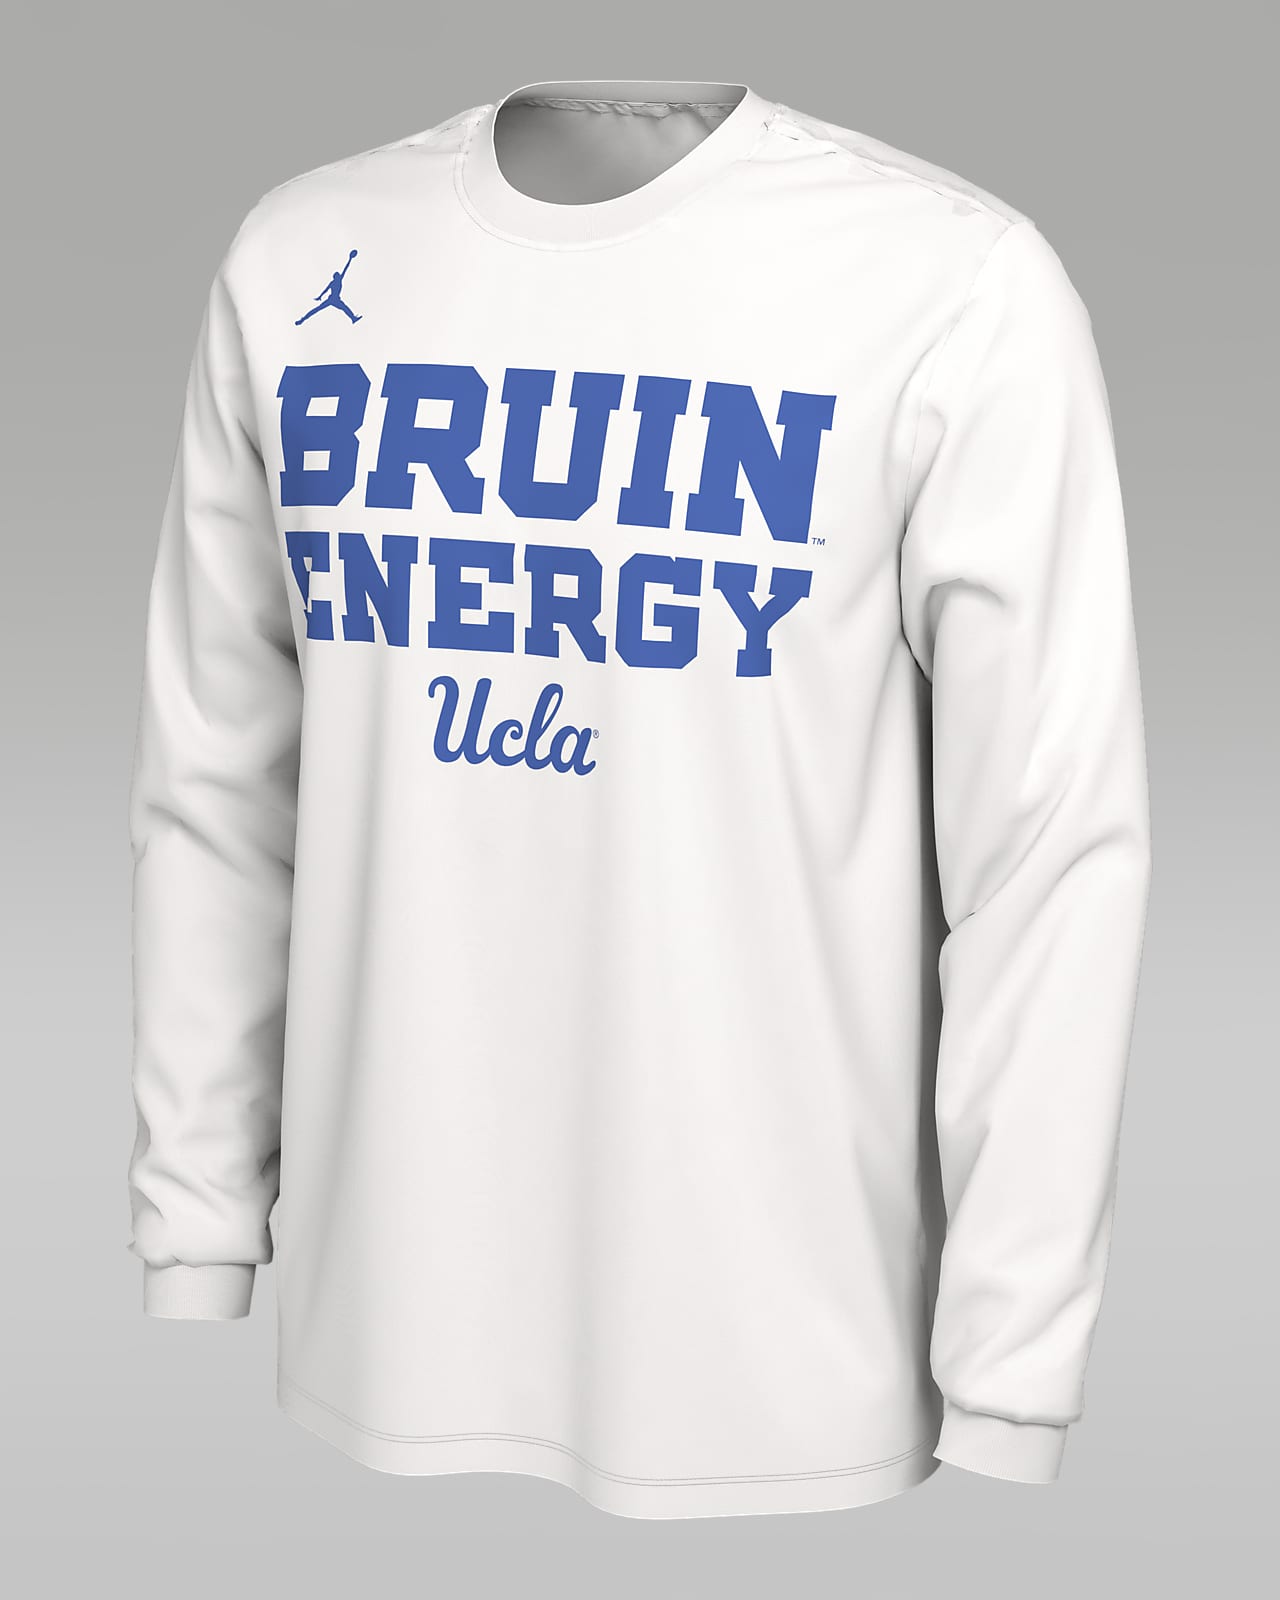 UCLA Men's Jordan College Long-Sleeve T-Shirt